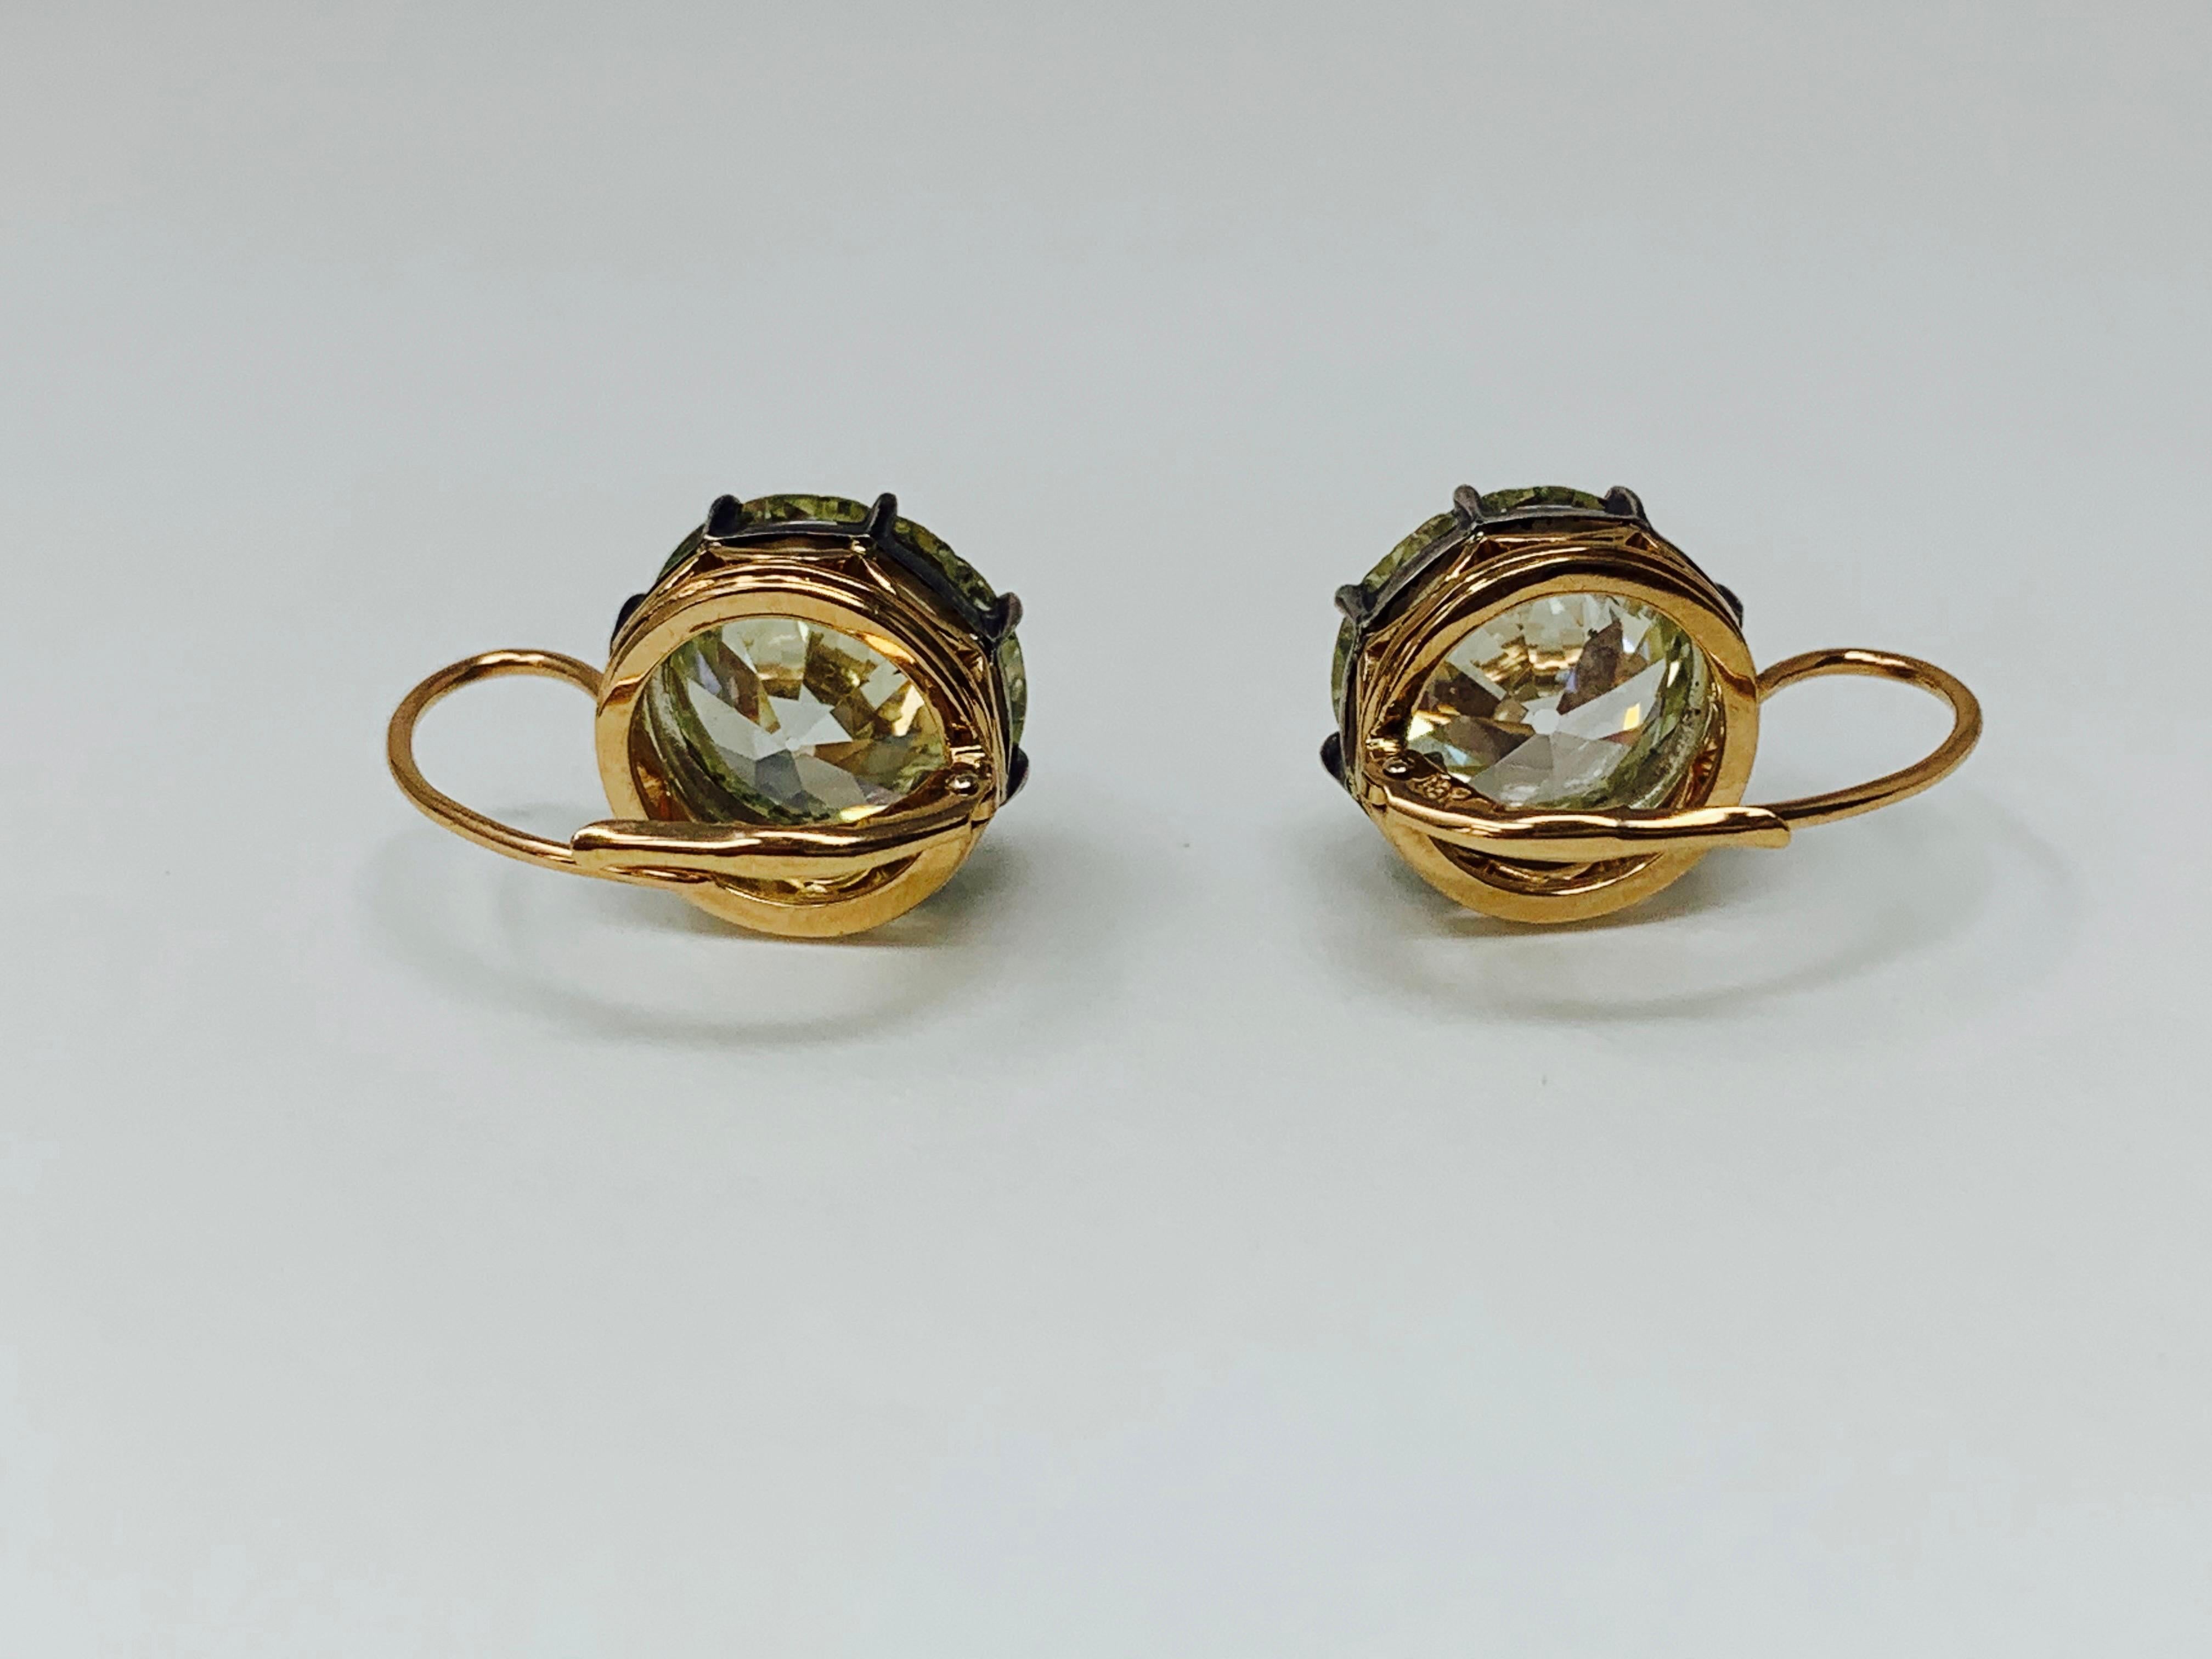 Old European Cut 16.28 Carat Antique Style Old European Diamond Drop Earrings in Rose Gold